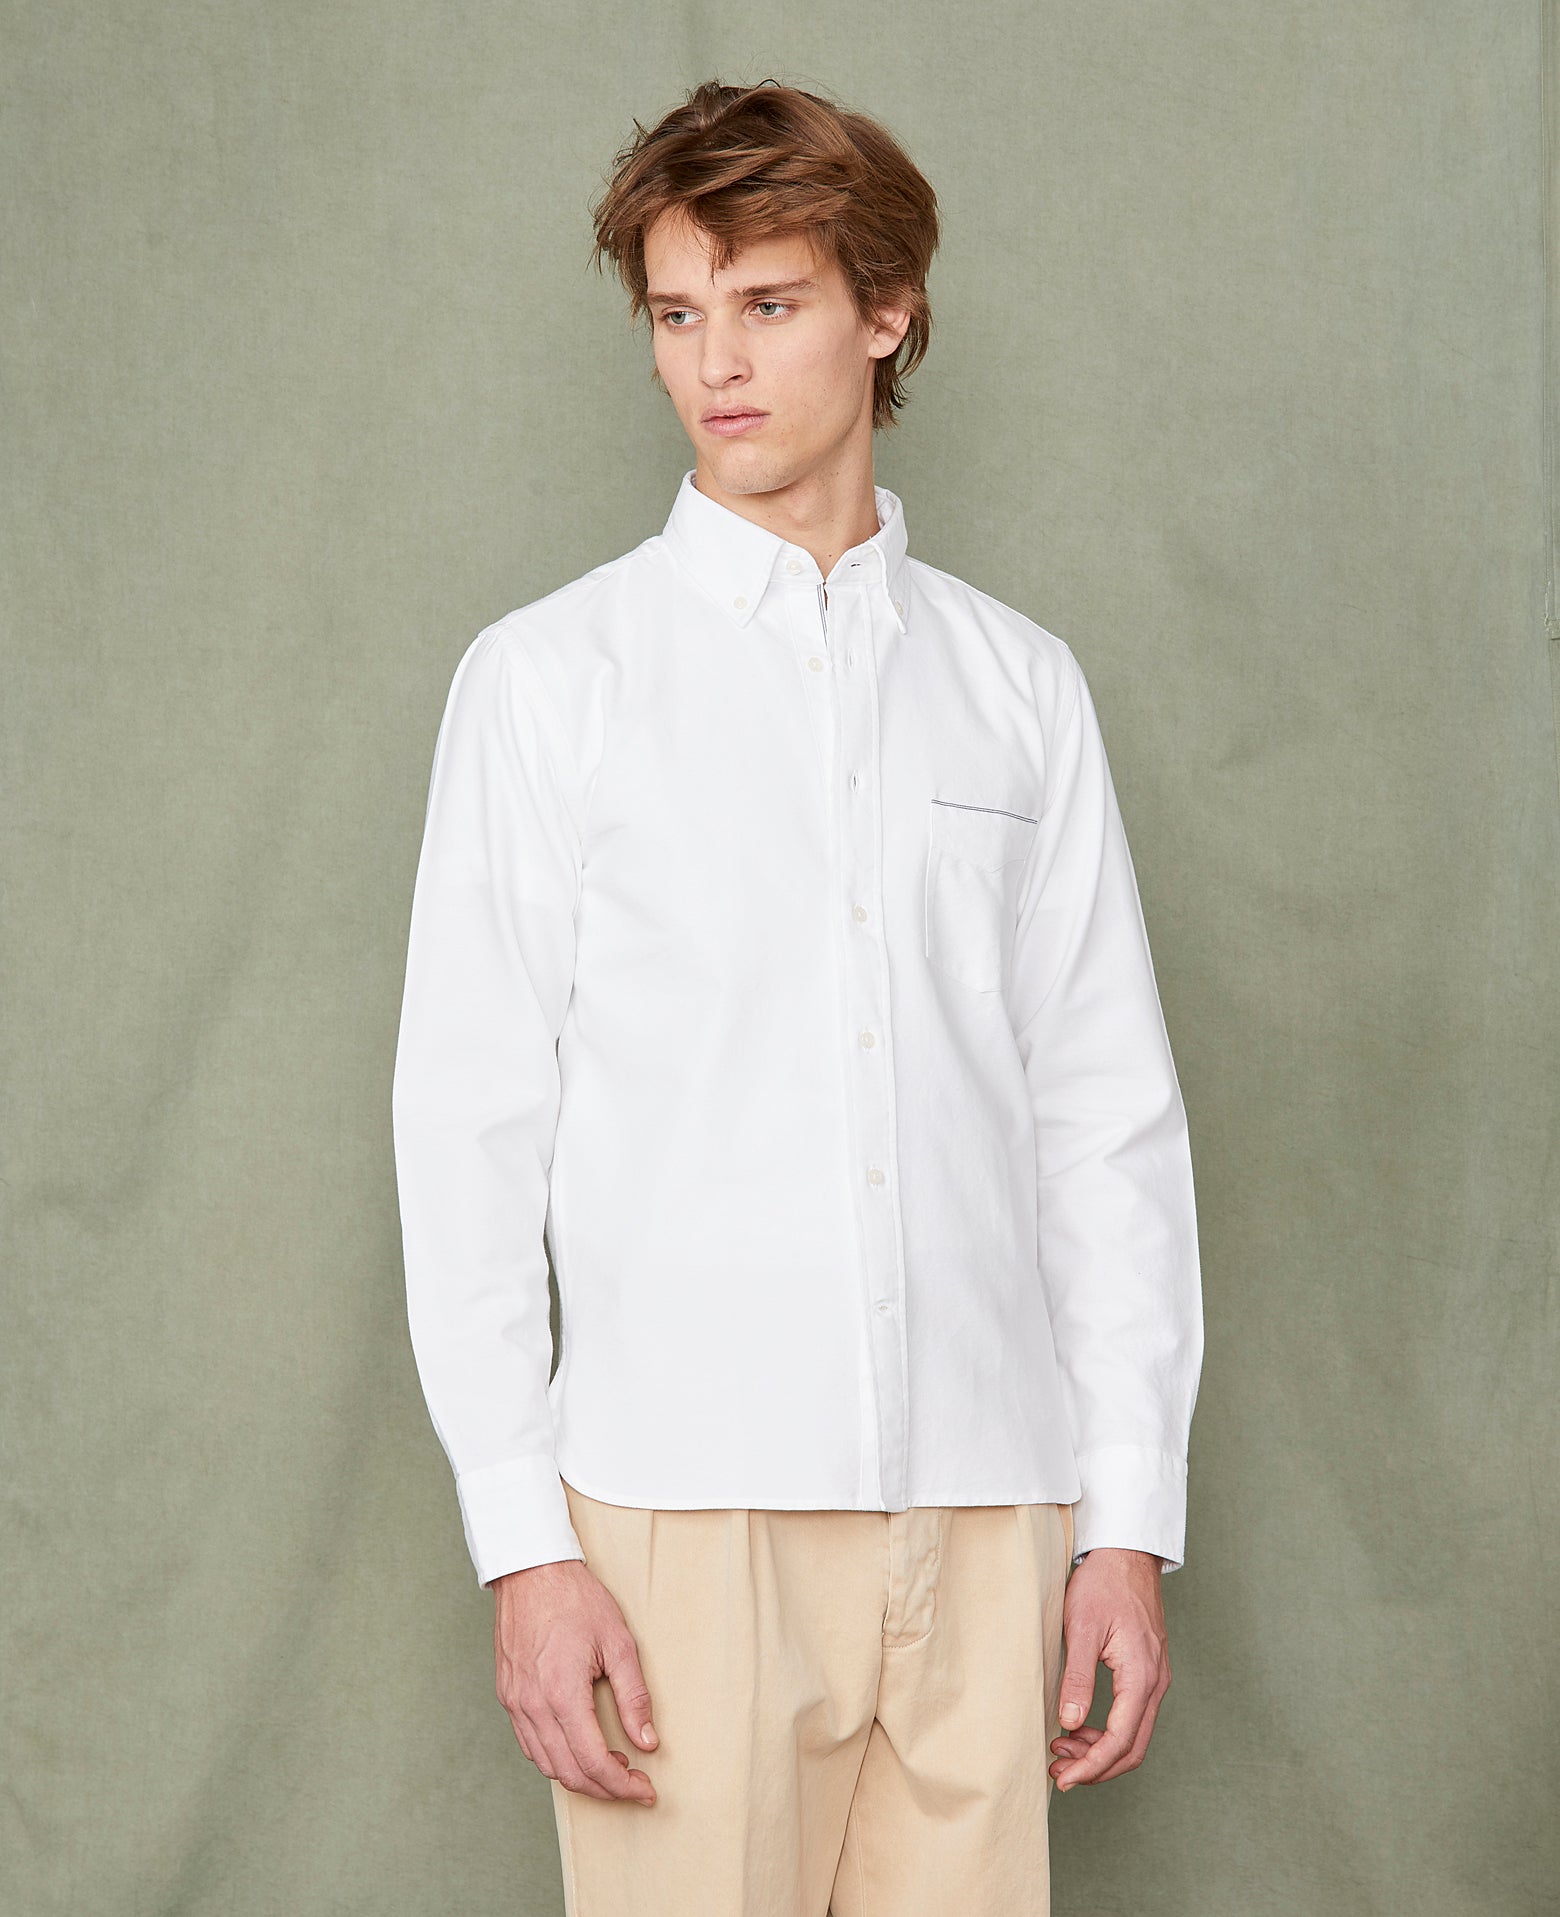 The New Oxford Shirt in 'Crisp White' Organic Cotton